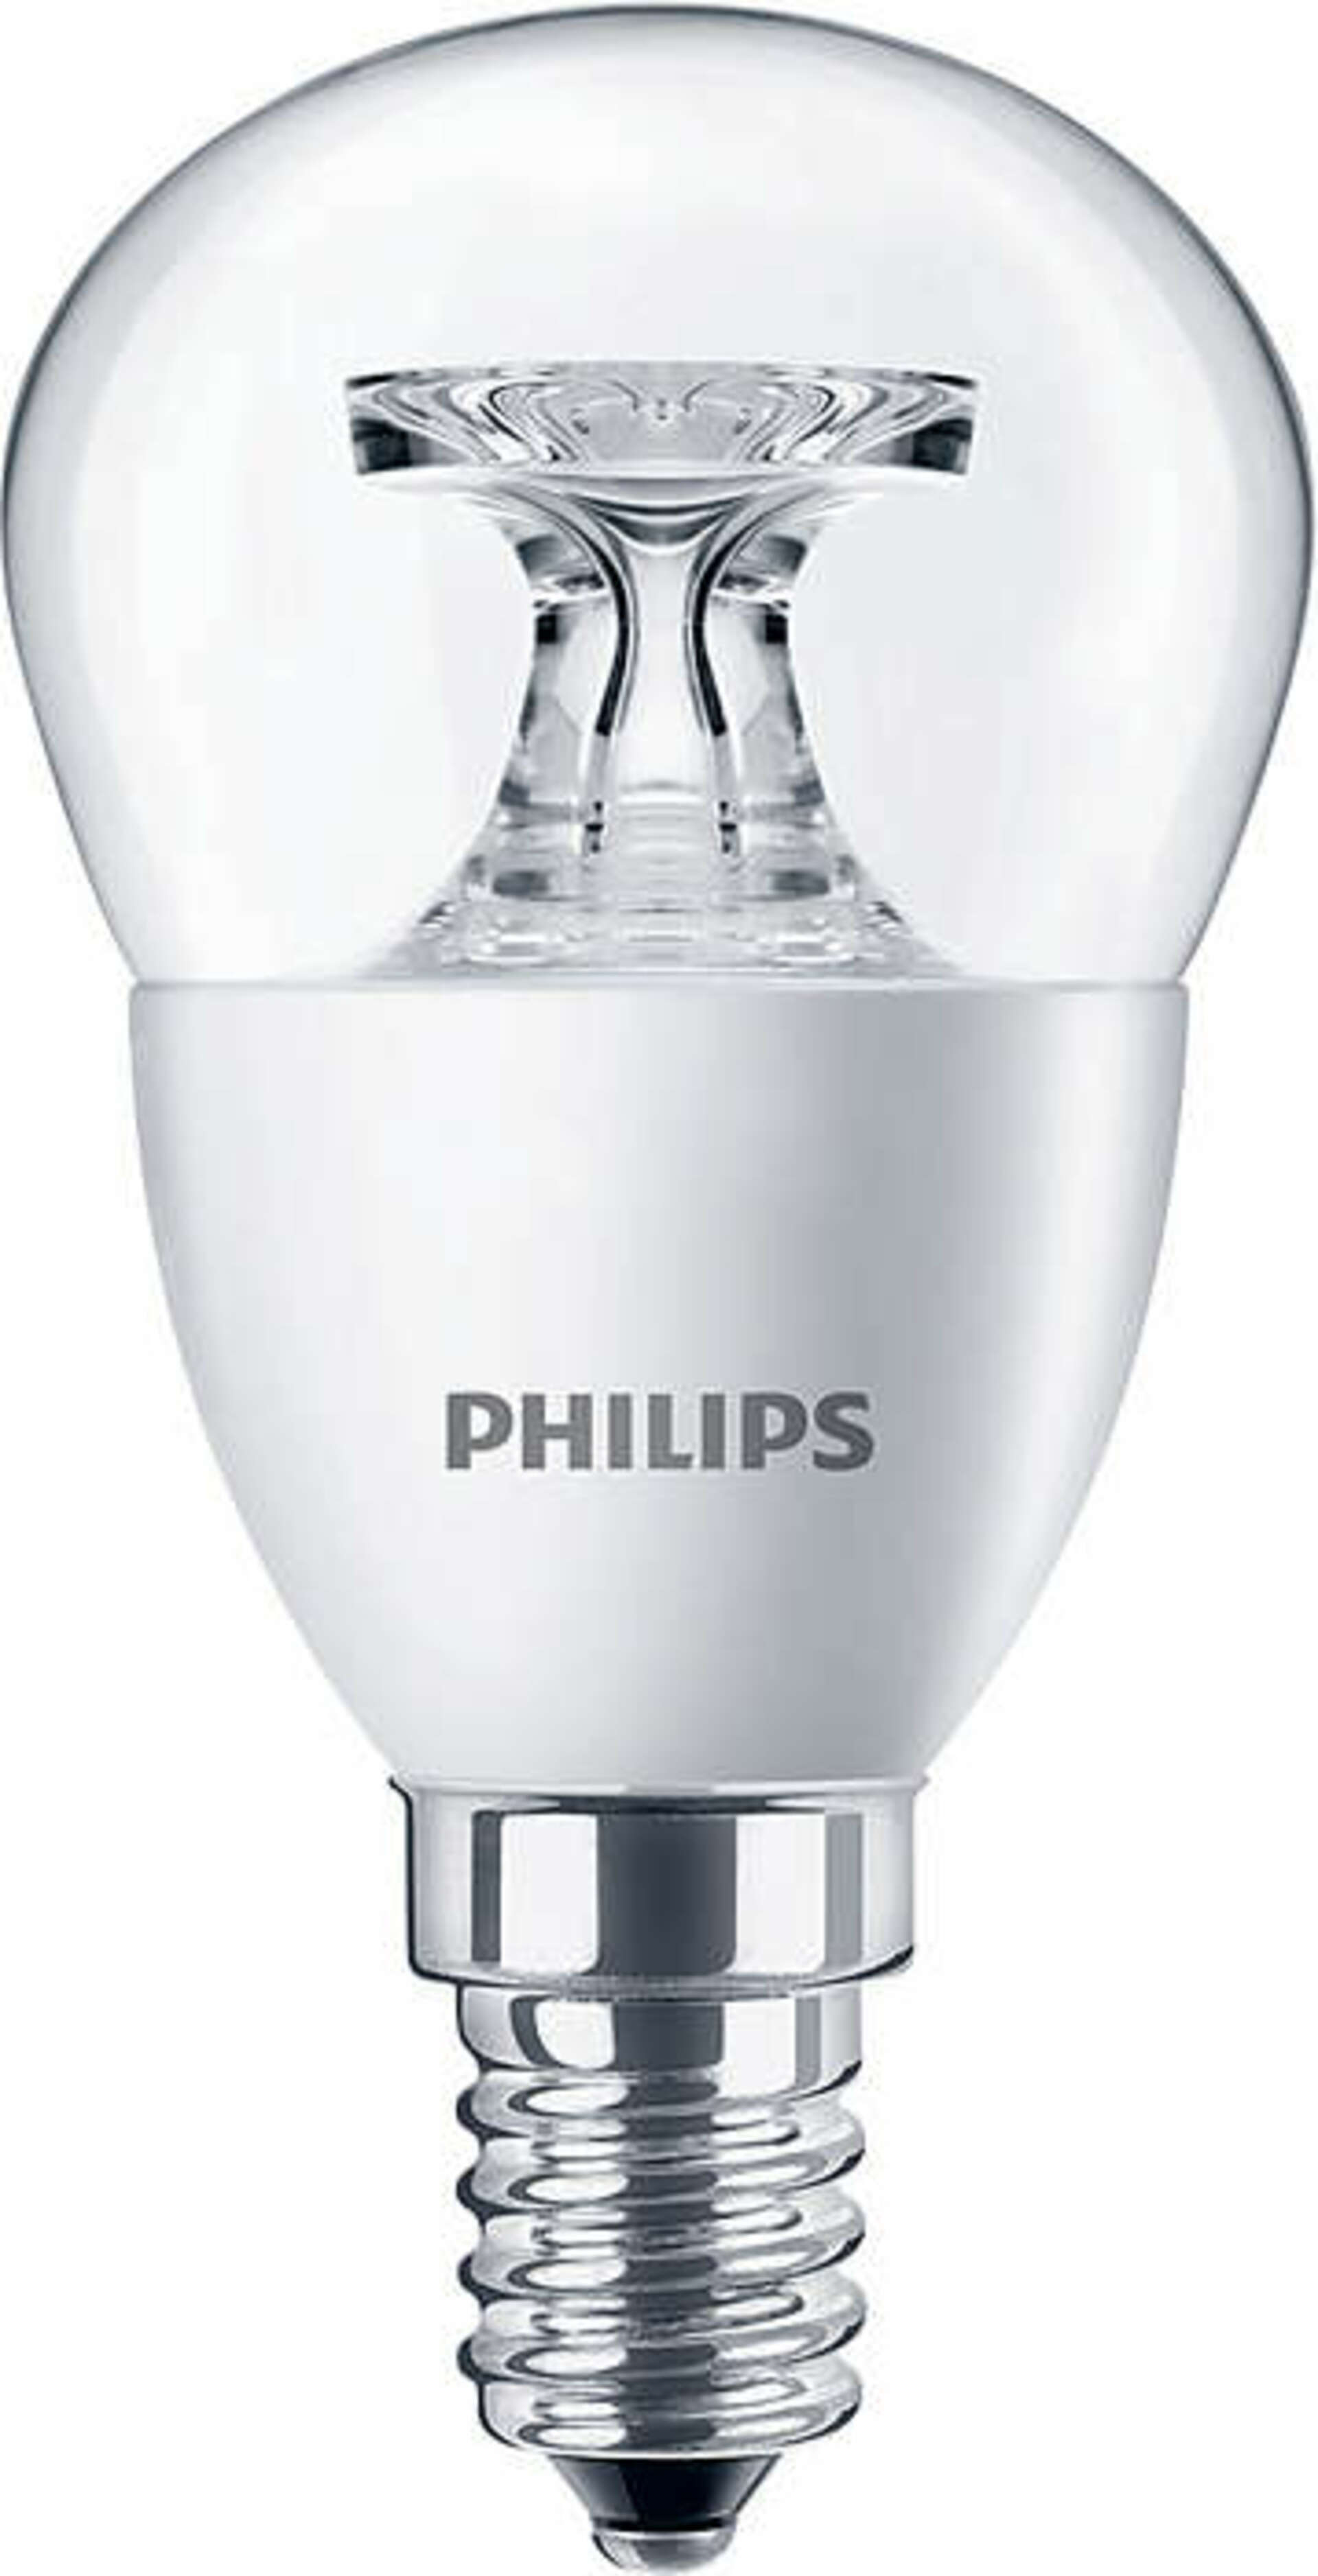 Philips Corepro LEDluster ND 4-25W E14 827 P45 CL